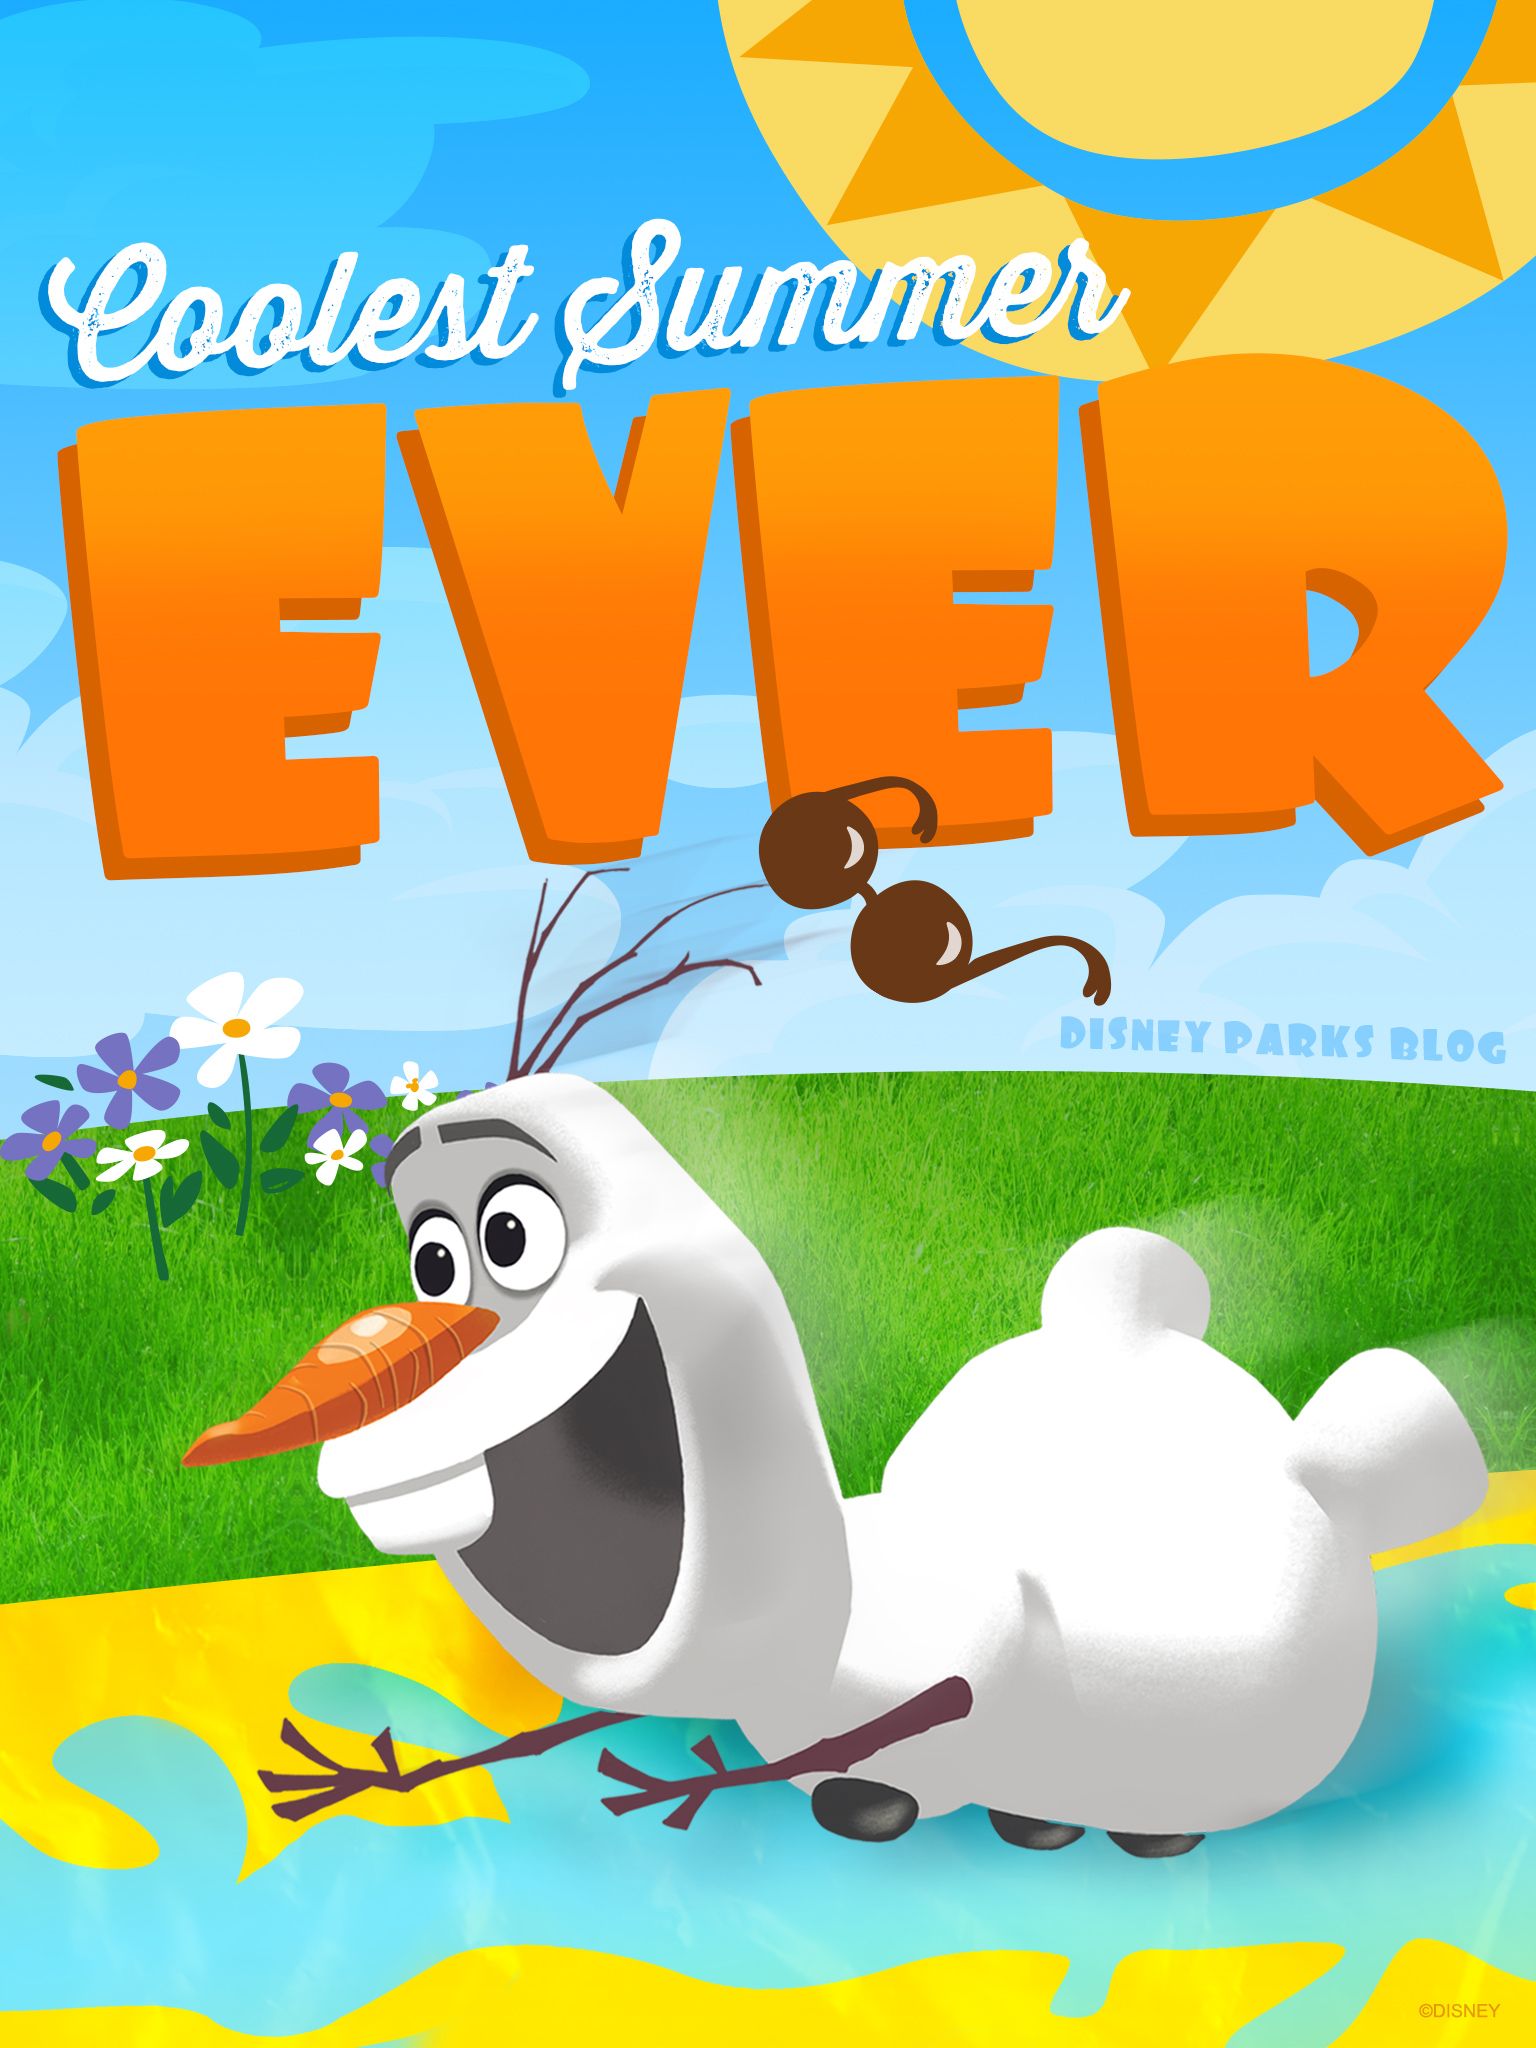 Frozen Olaf In Summer Wallpapers